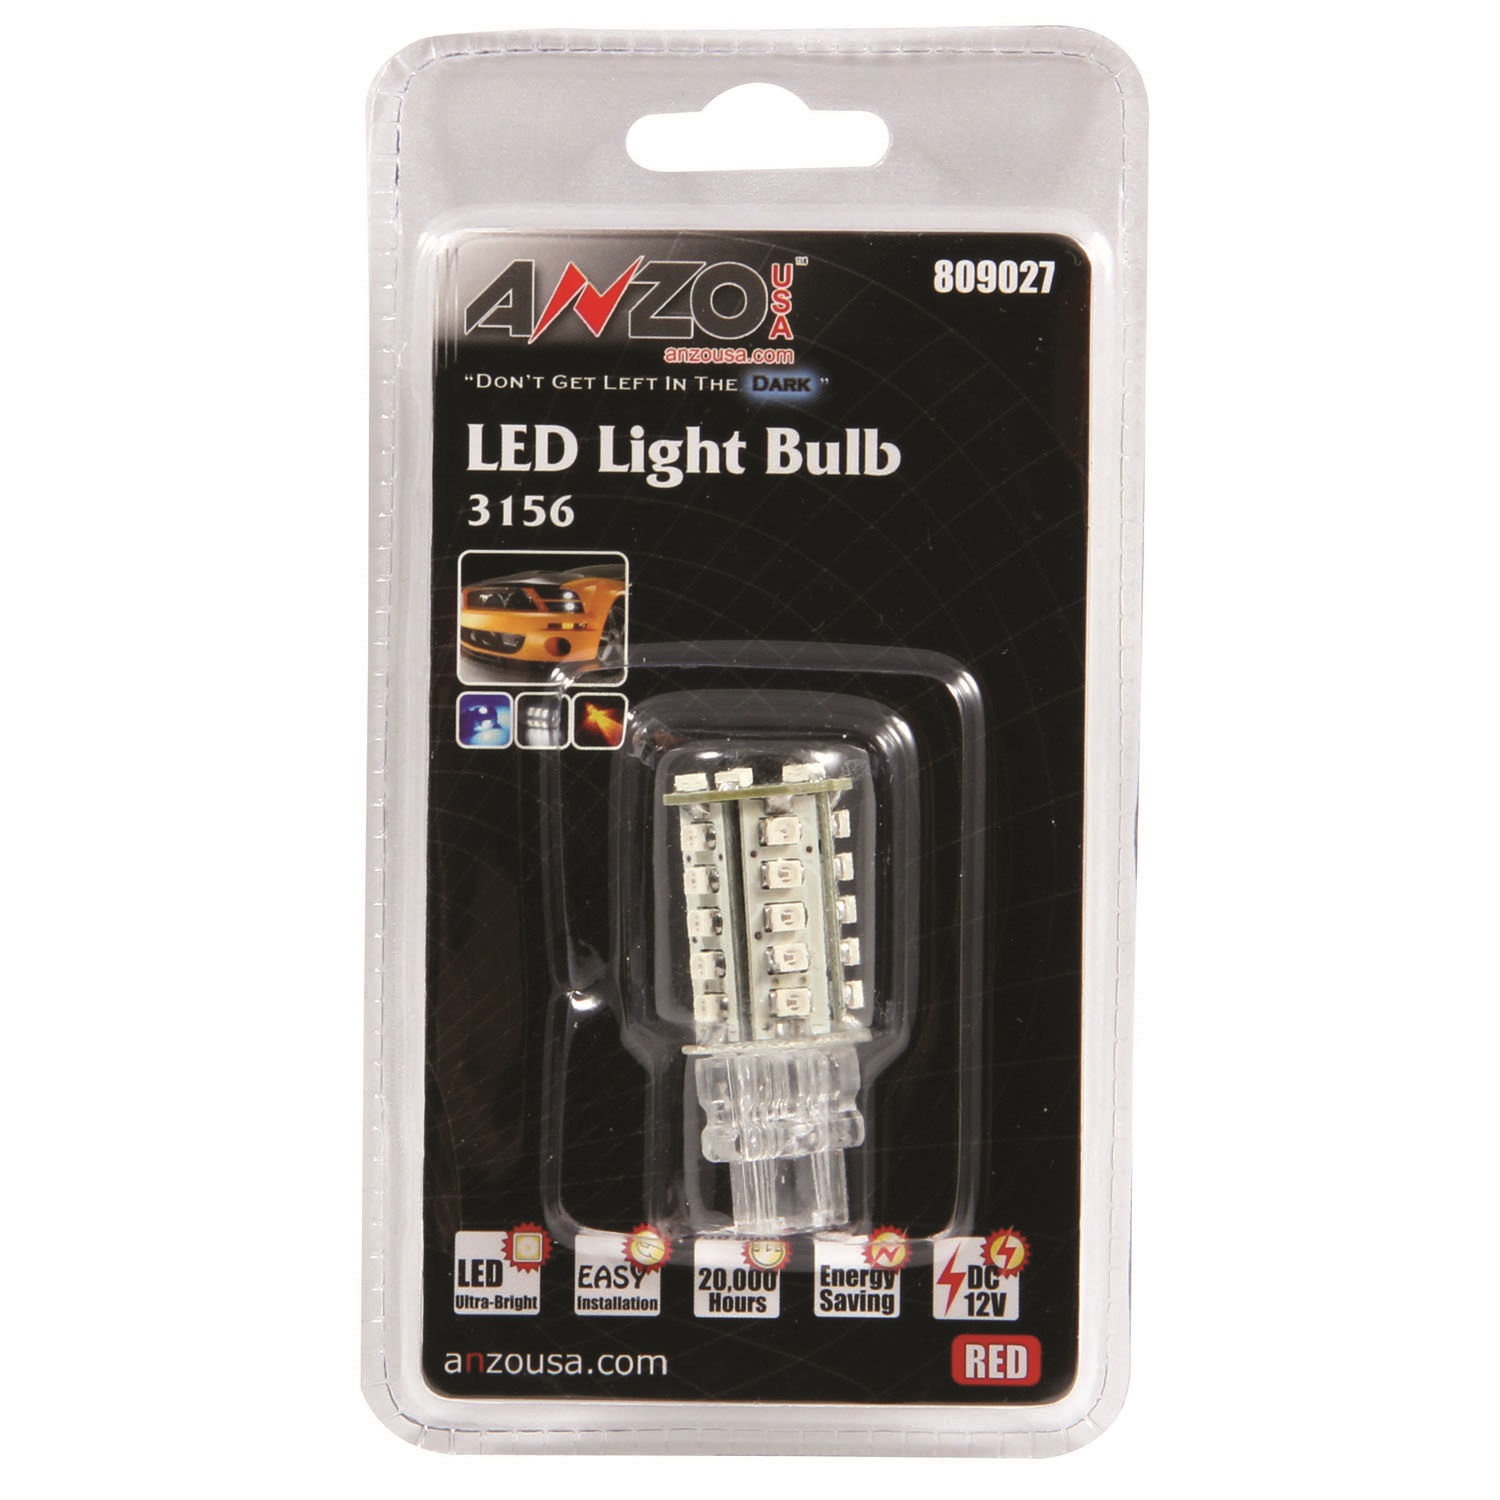 Anzo USA Anzo USA 809027 LED Replacement Bulb